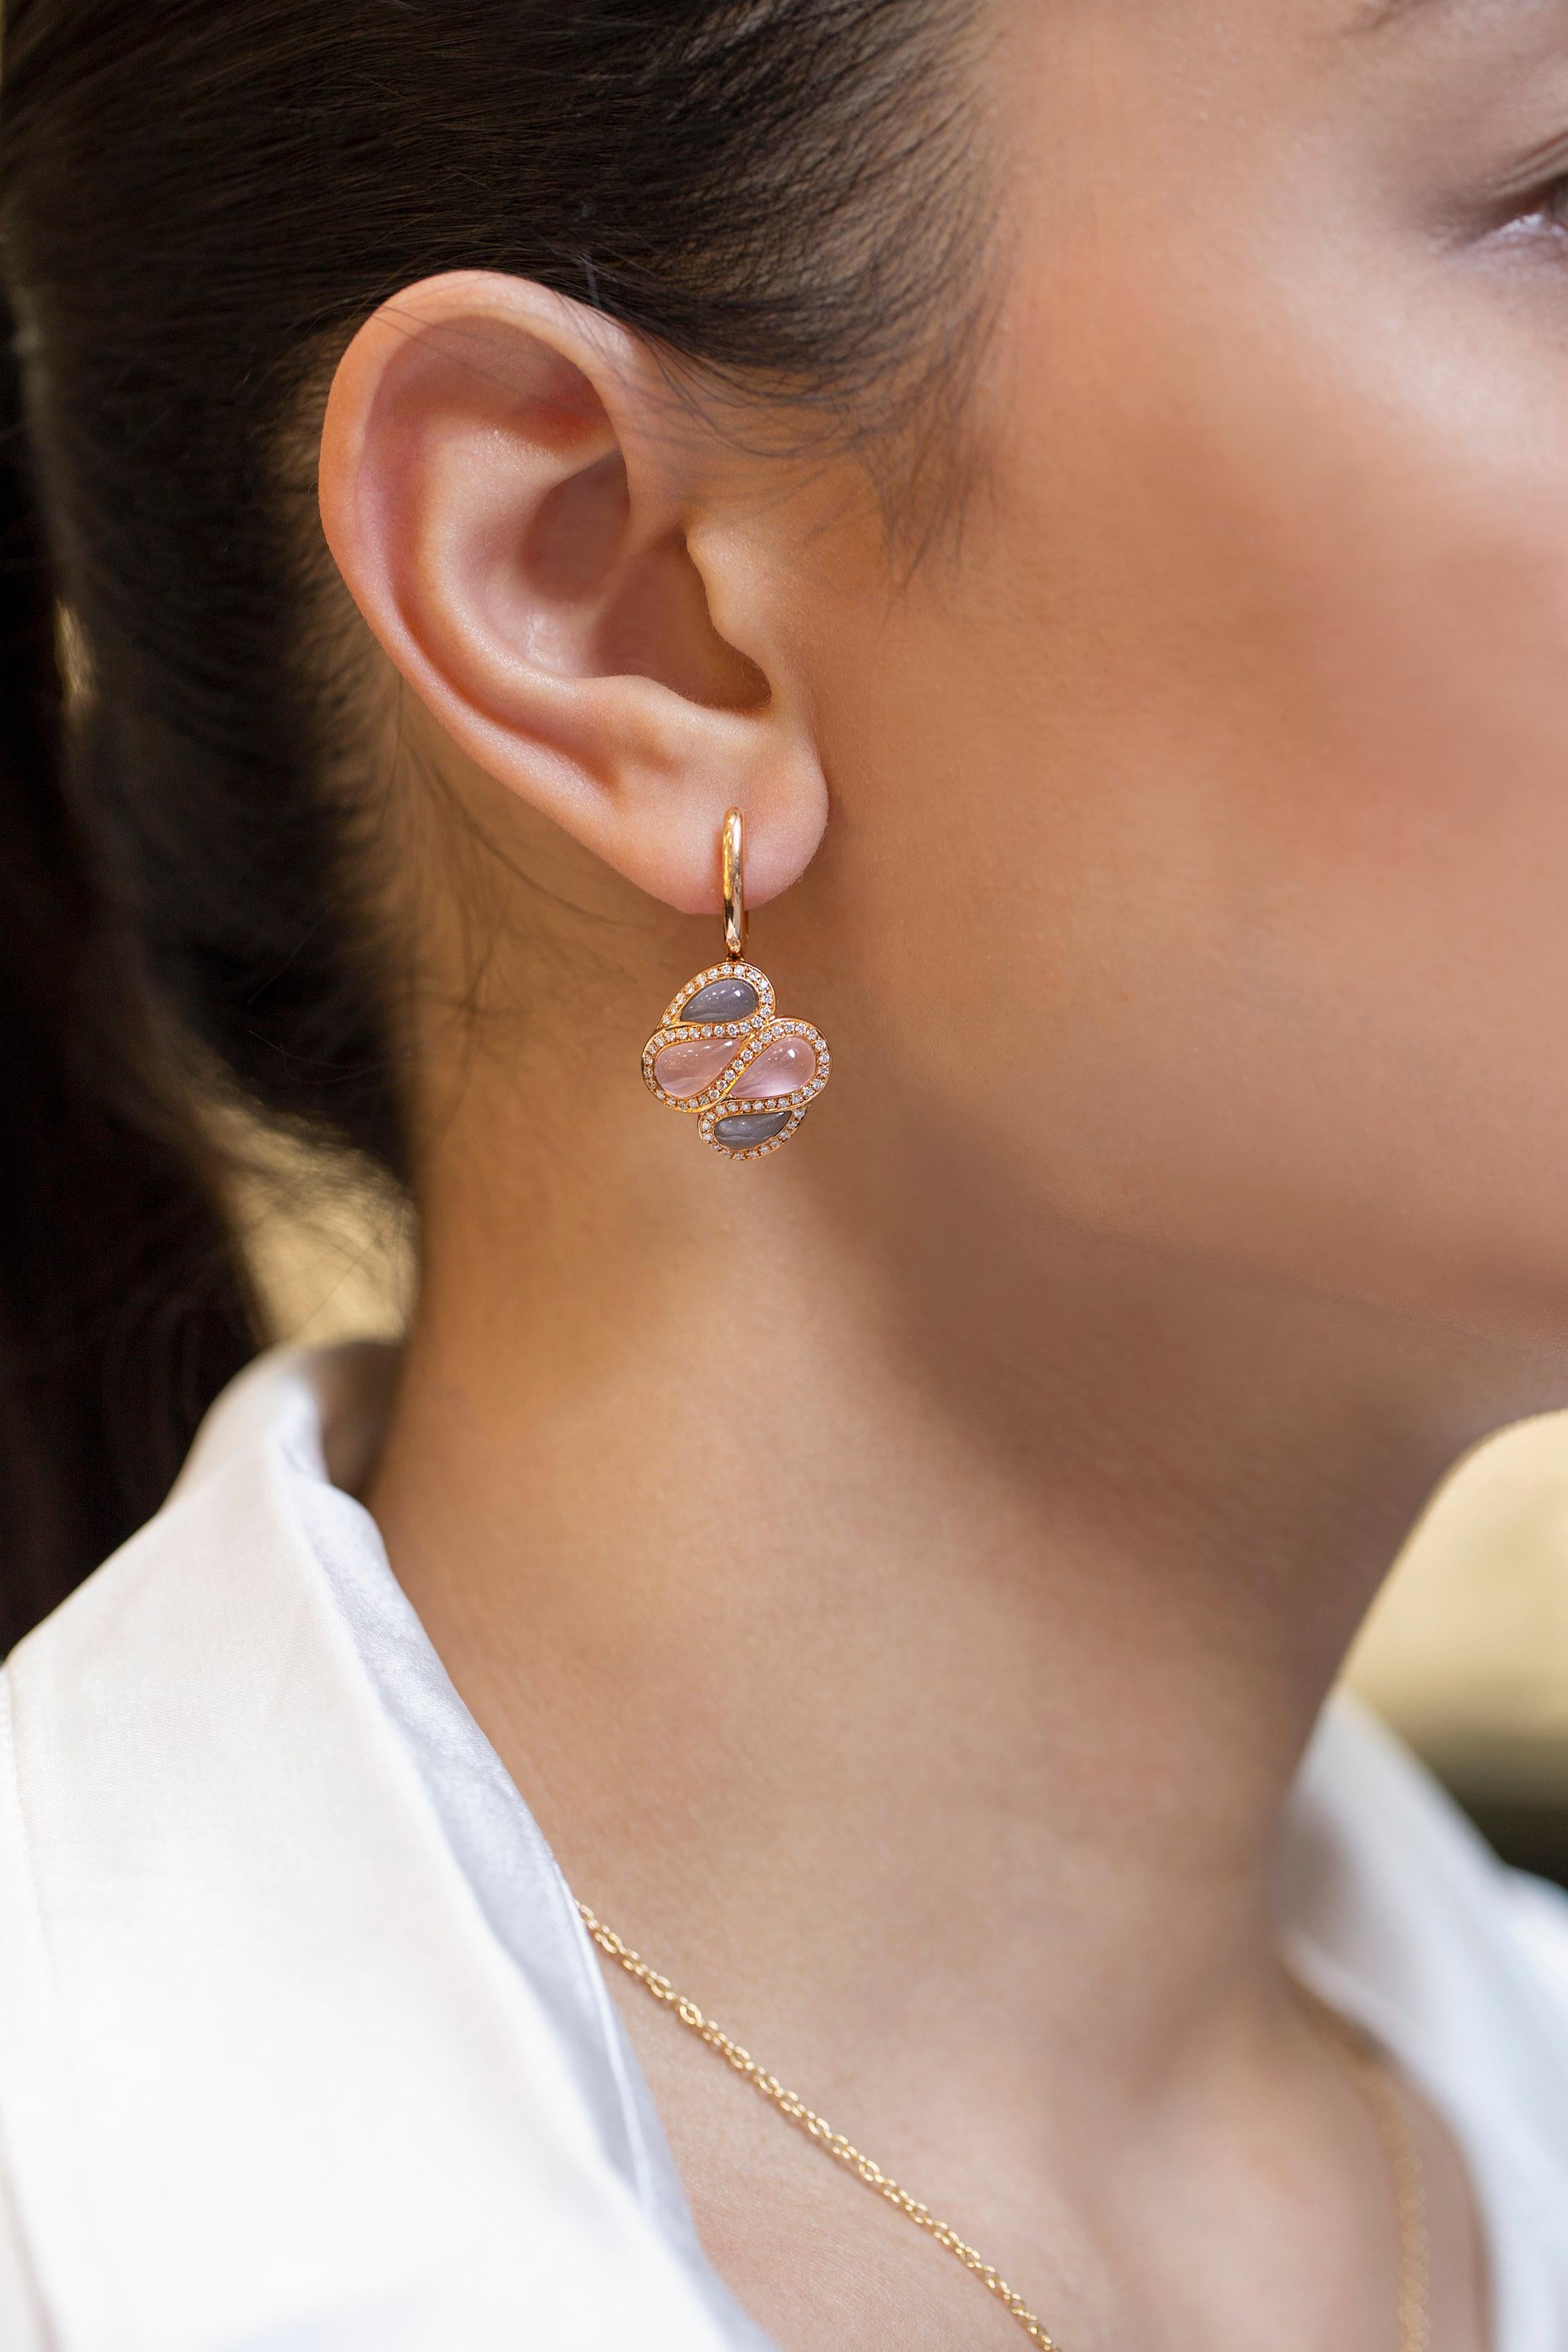 hitachi earrings